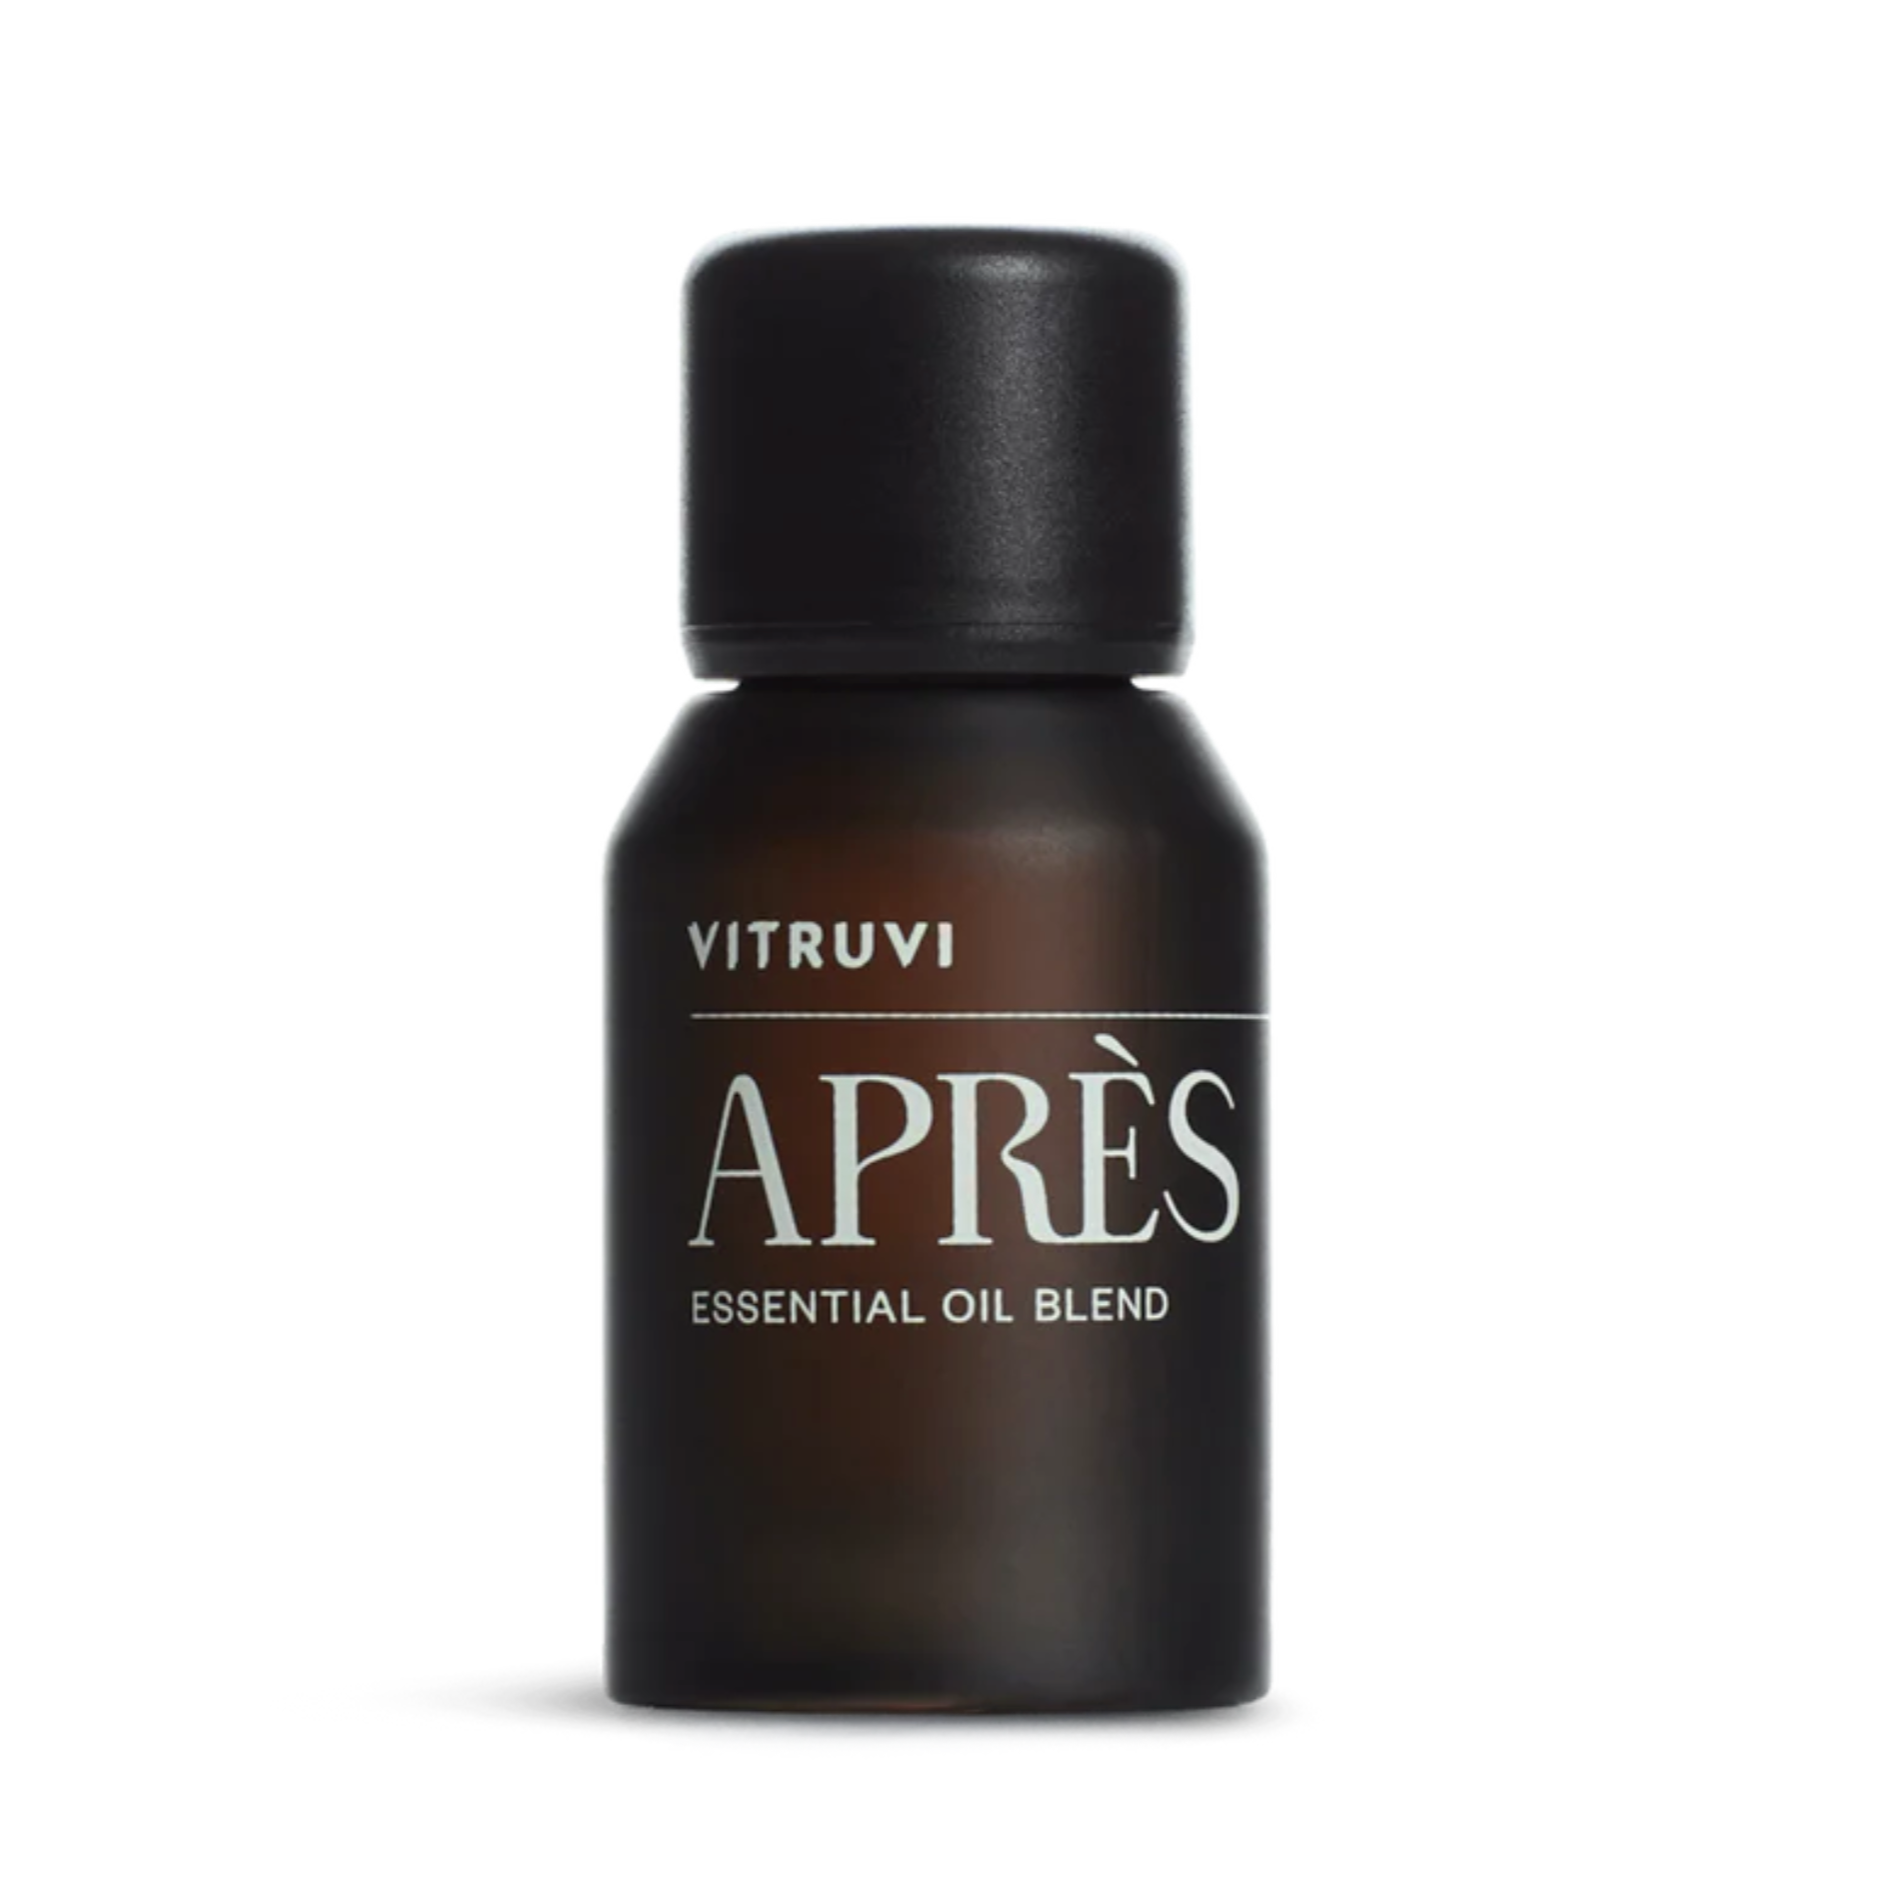 Image of Vitruvi's Apres Essential Oil Blend.